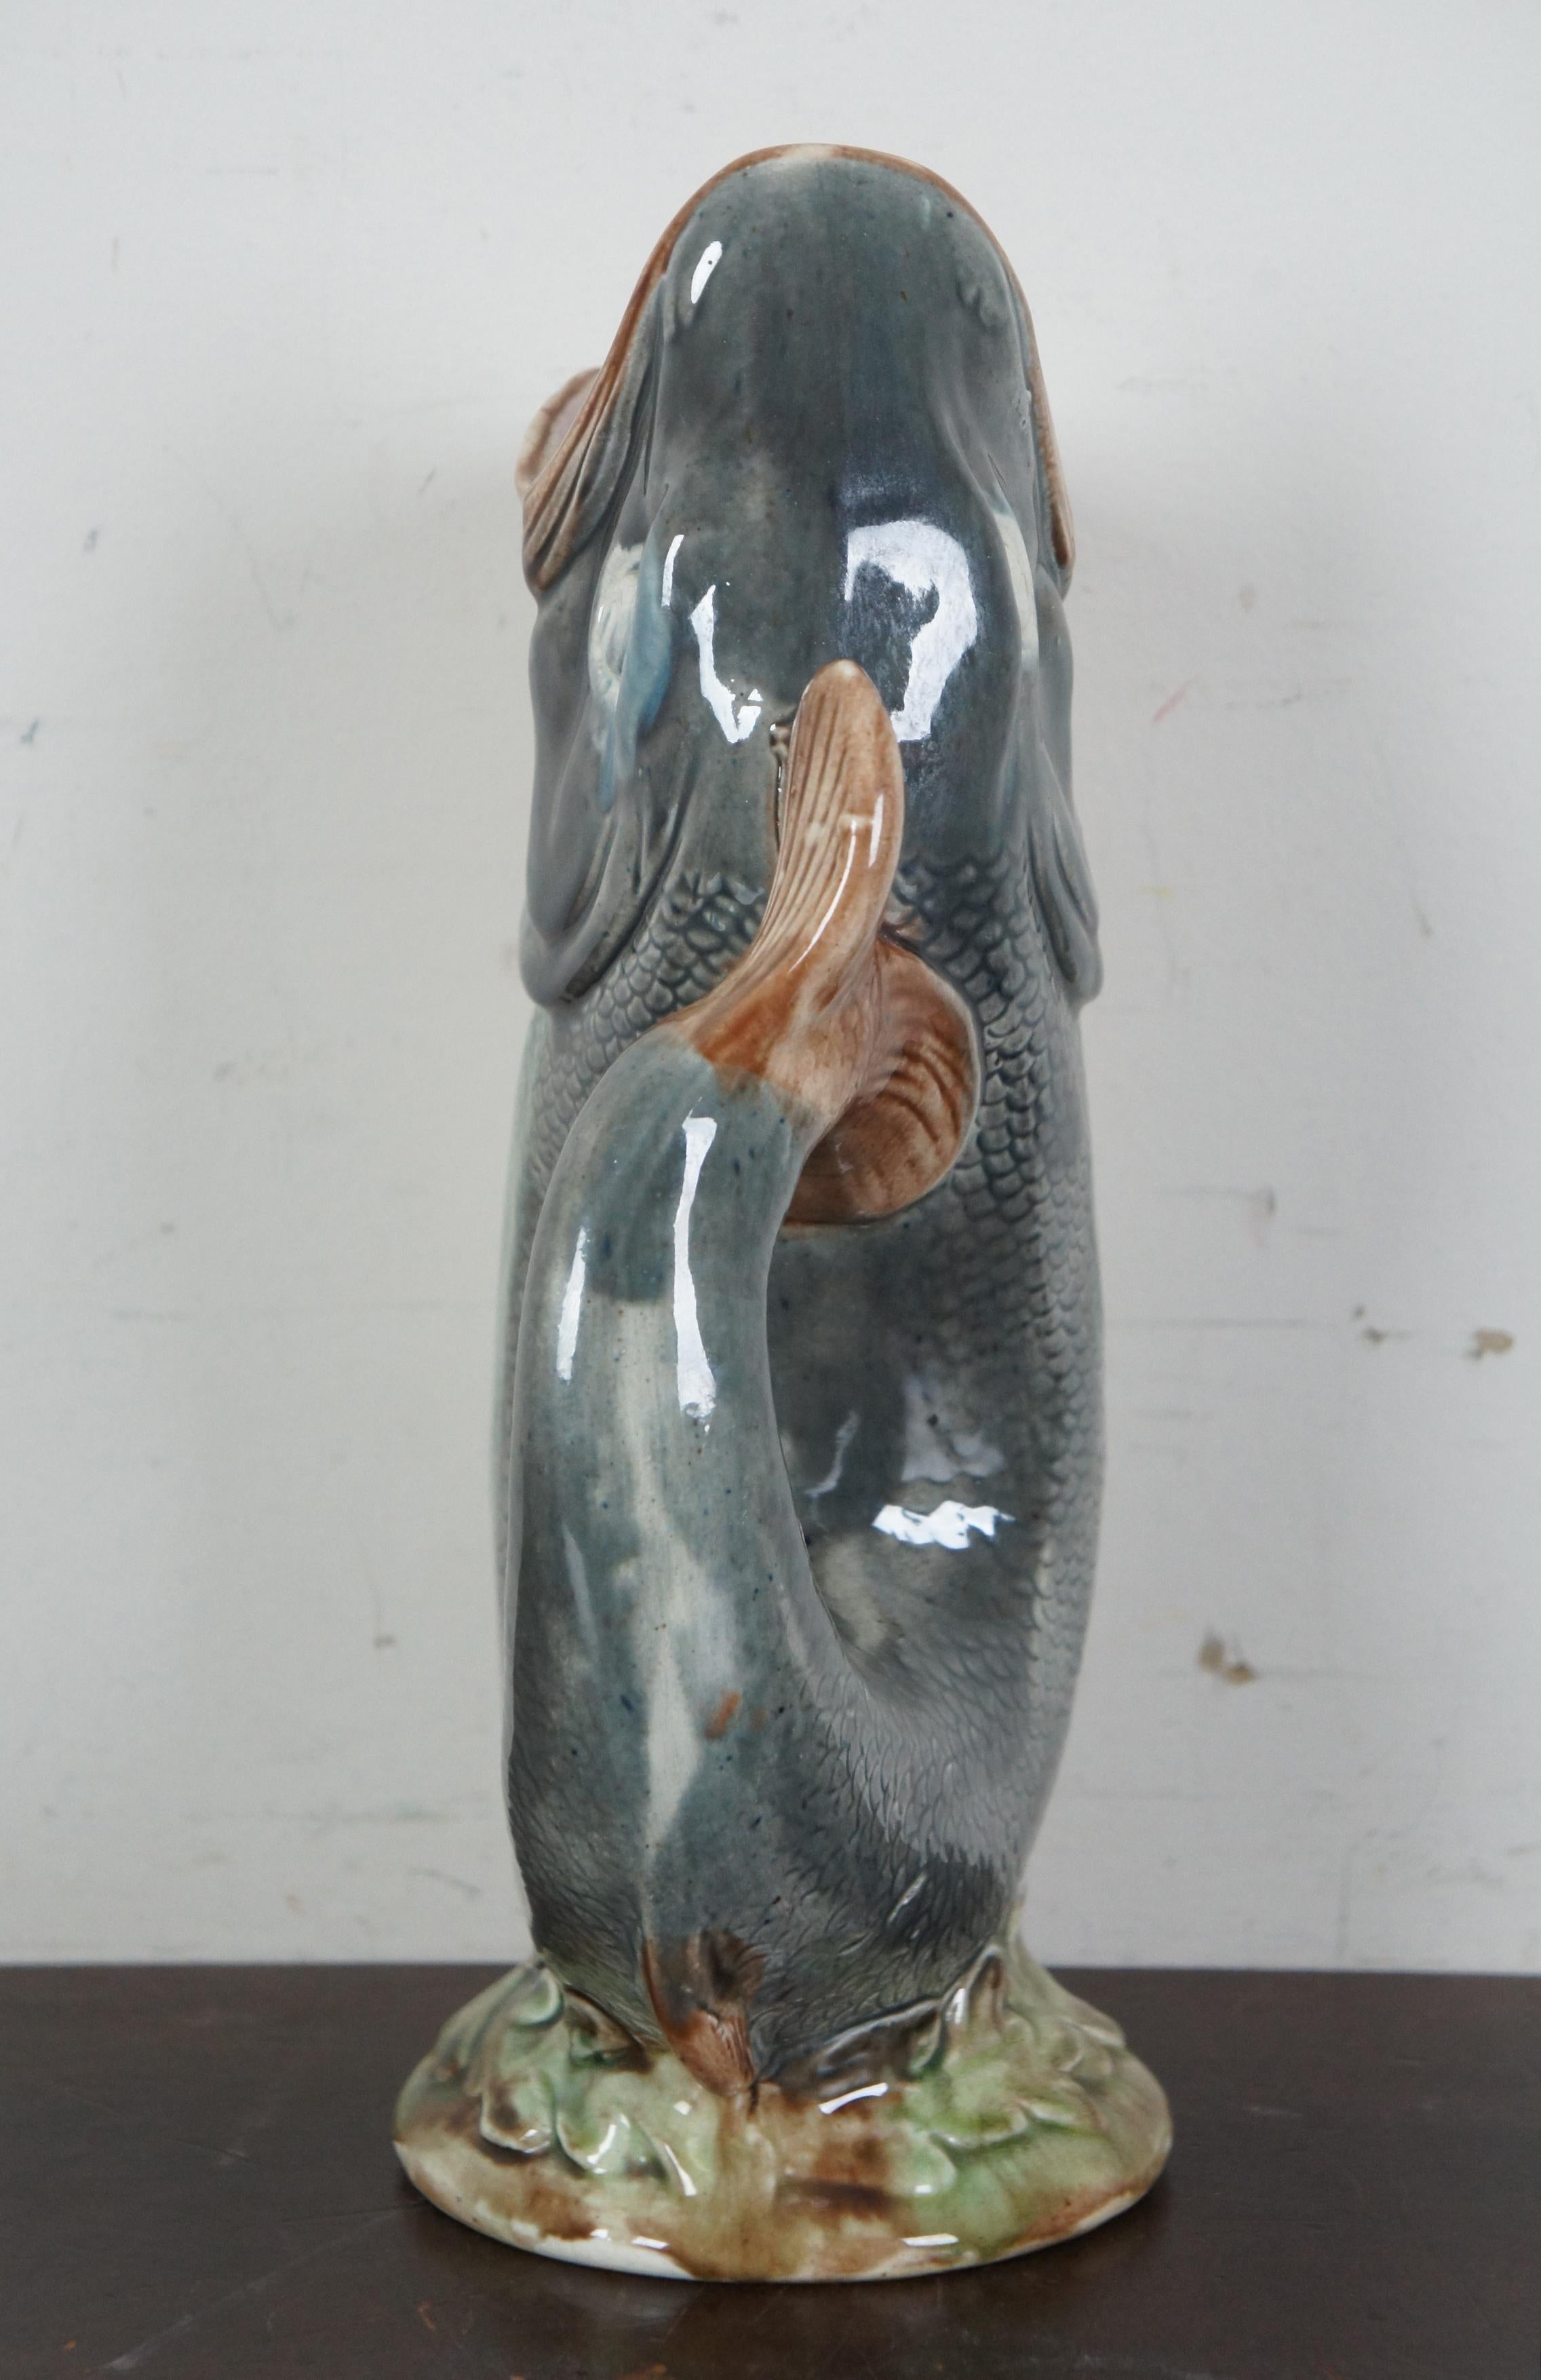 Victorian Antique 19th Century Majolica Gurgling Fish Jug Pitcher Vase Figurine